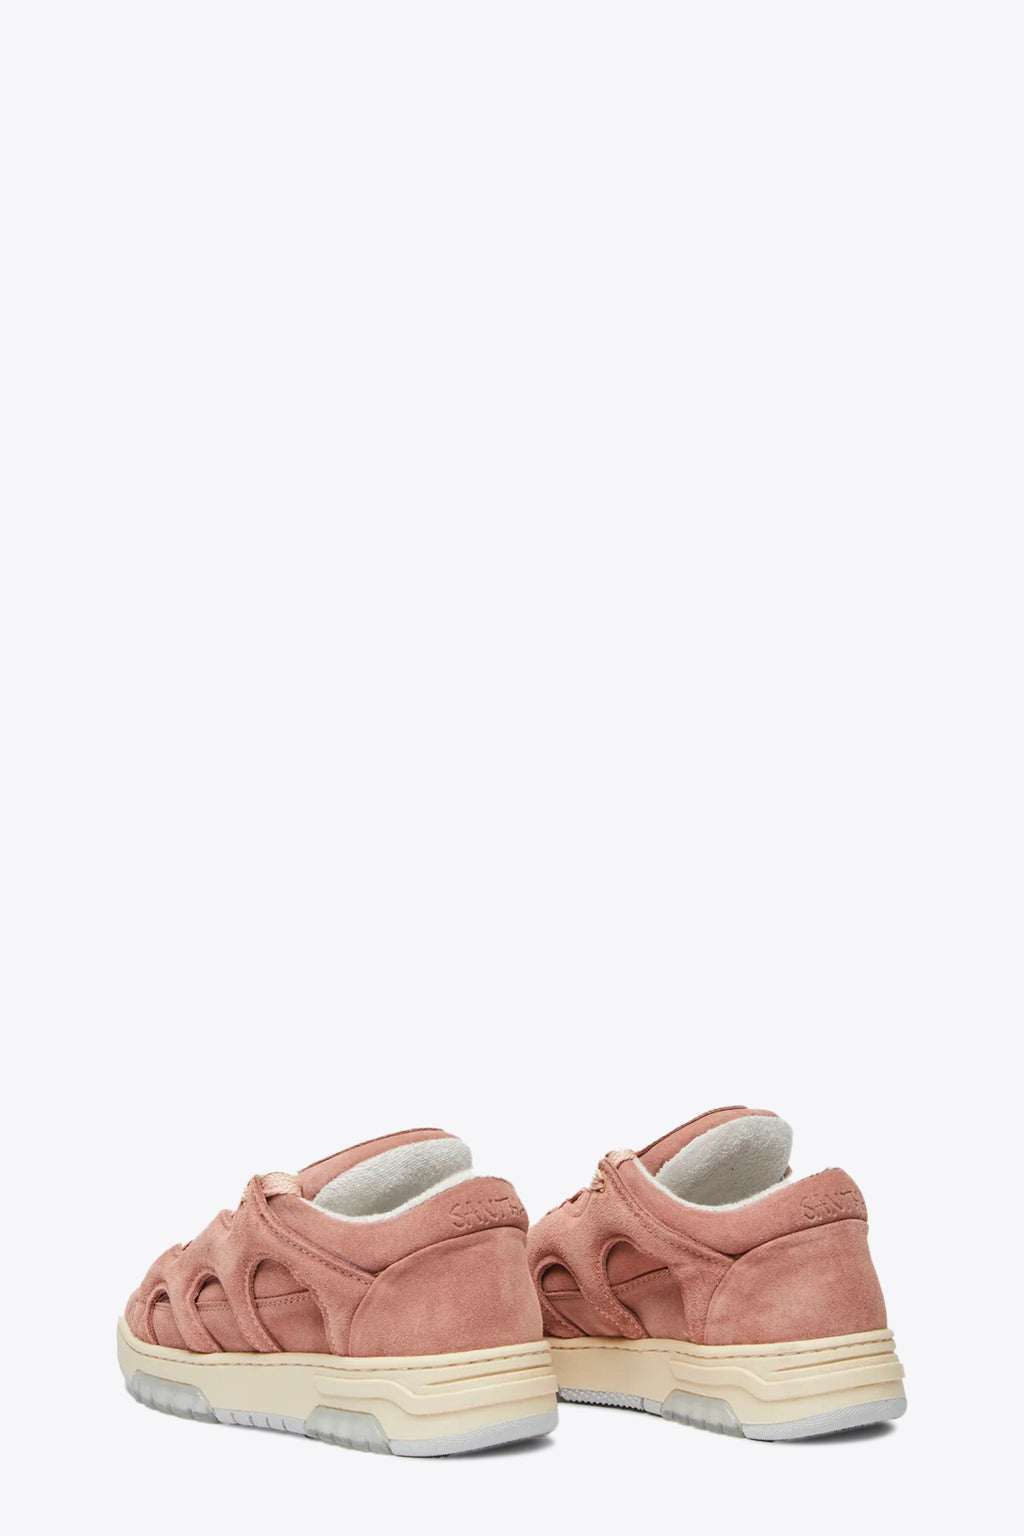 alt-image__Antique-pink-suede-low-sneaker